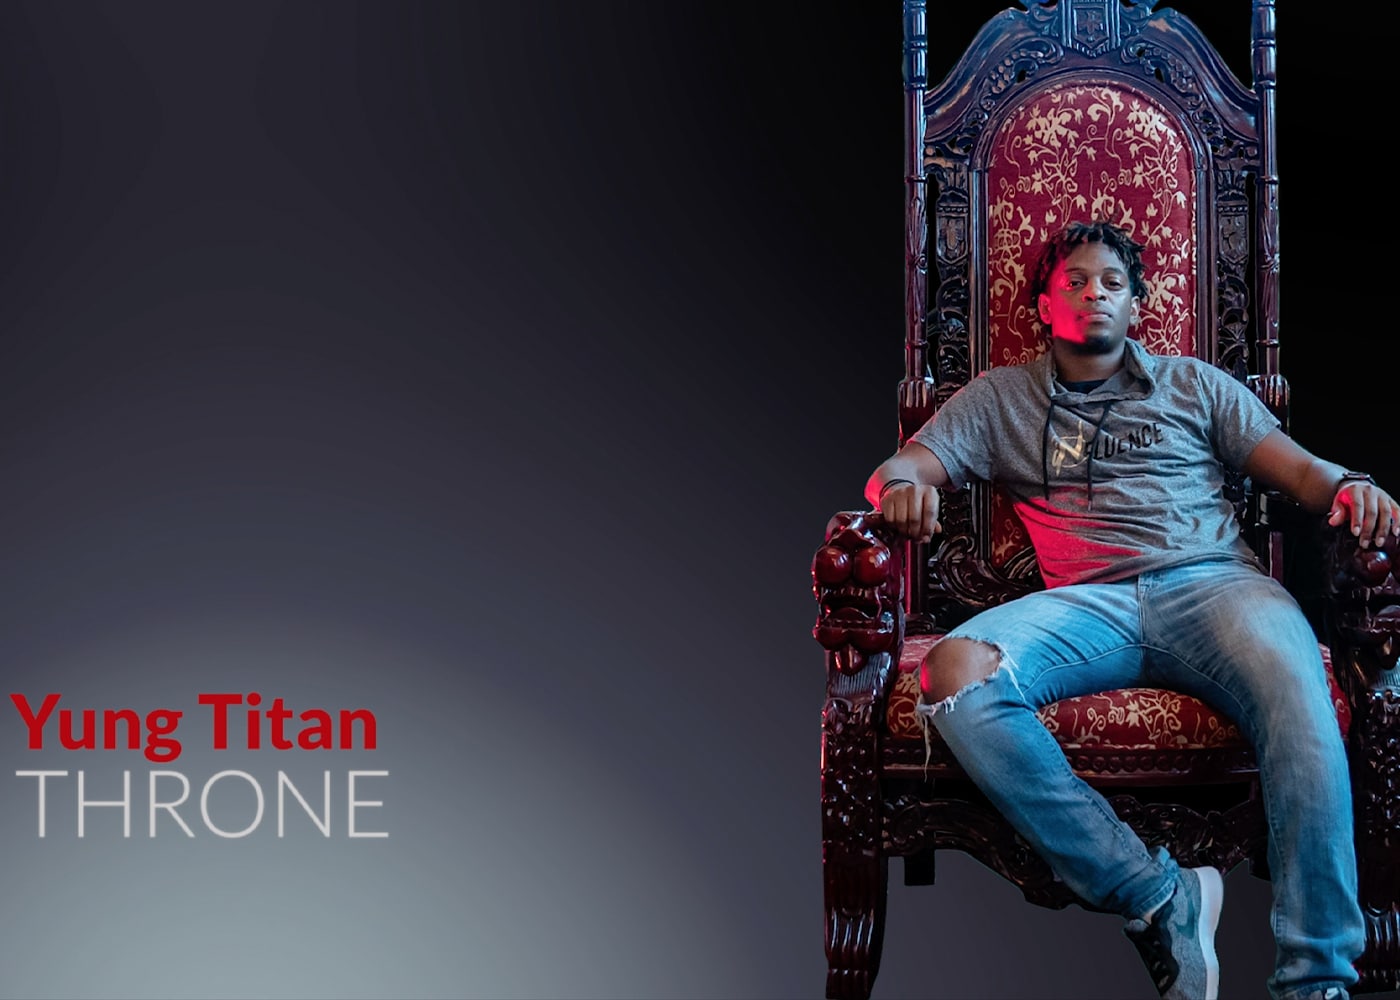 Yung Titan sitting on a throne image